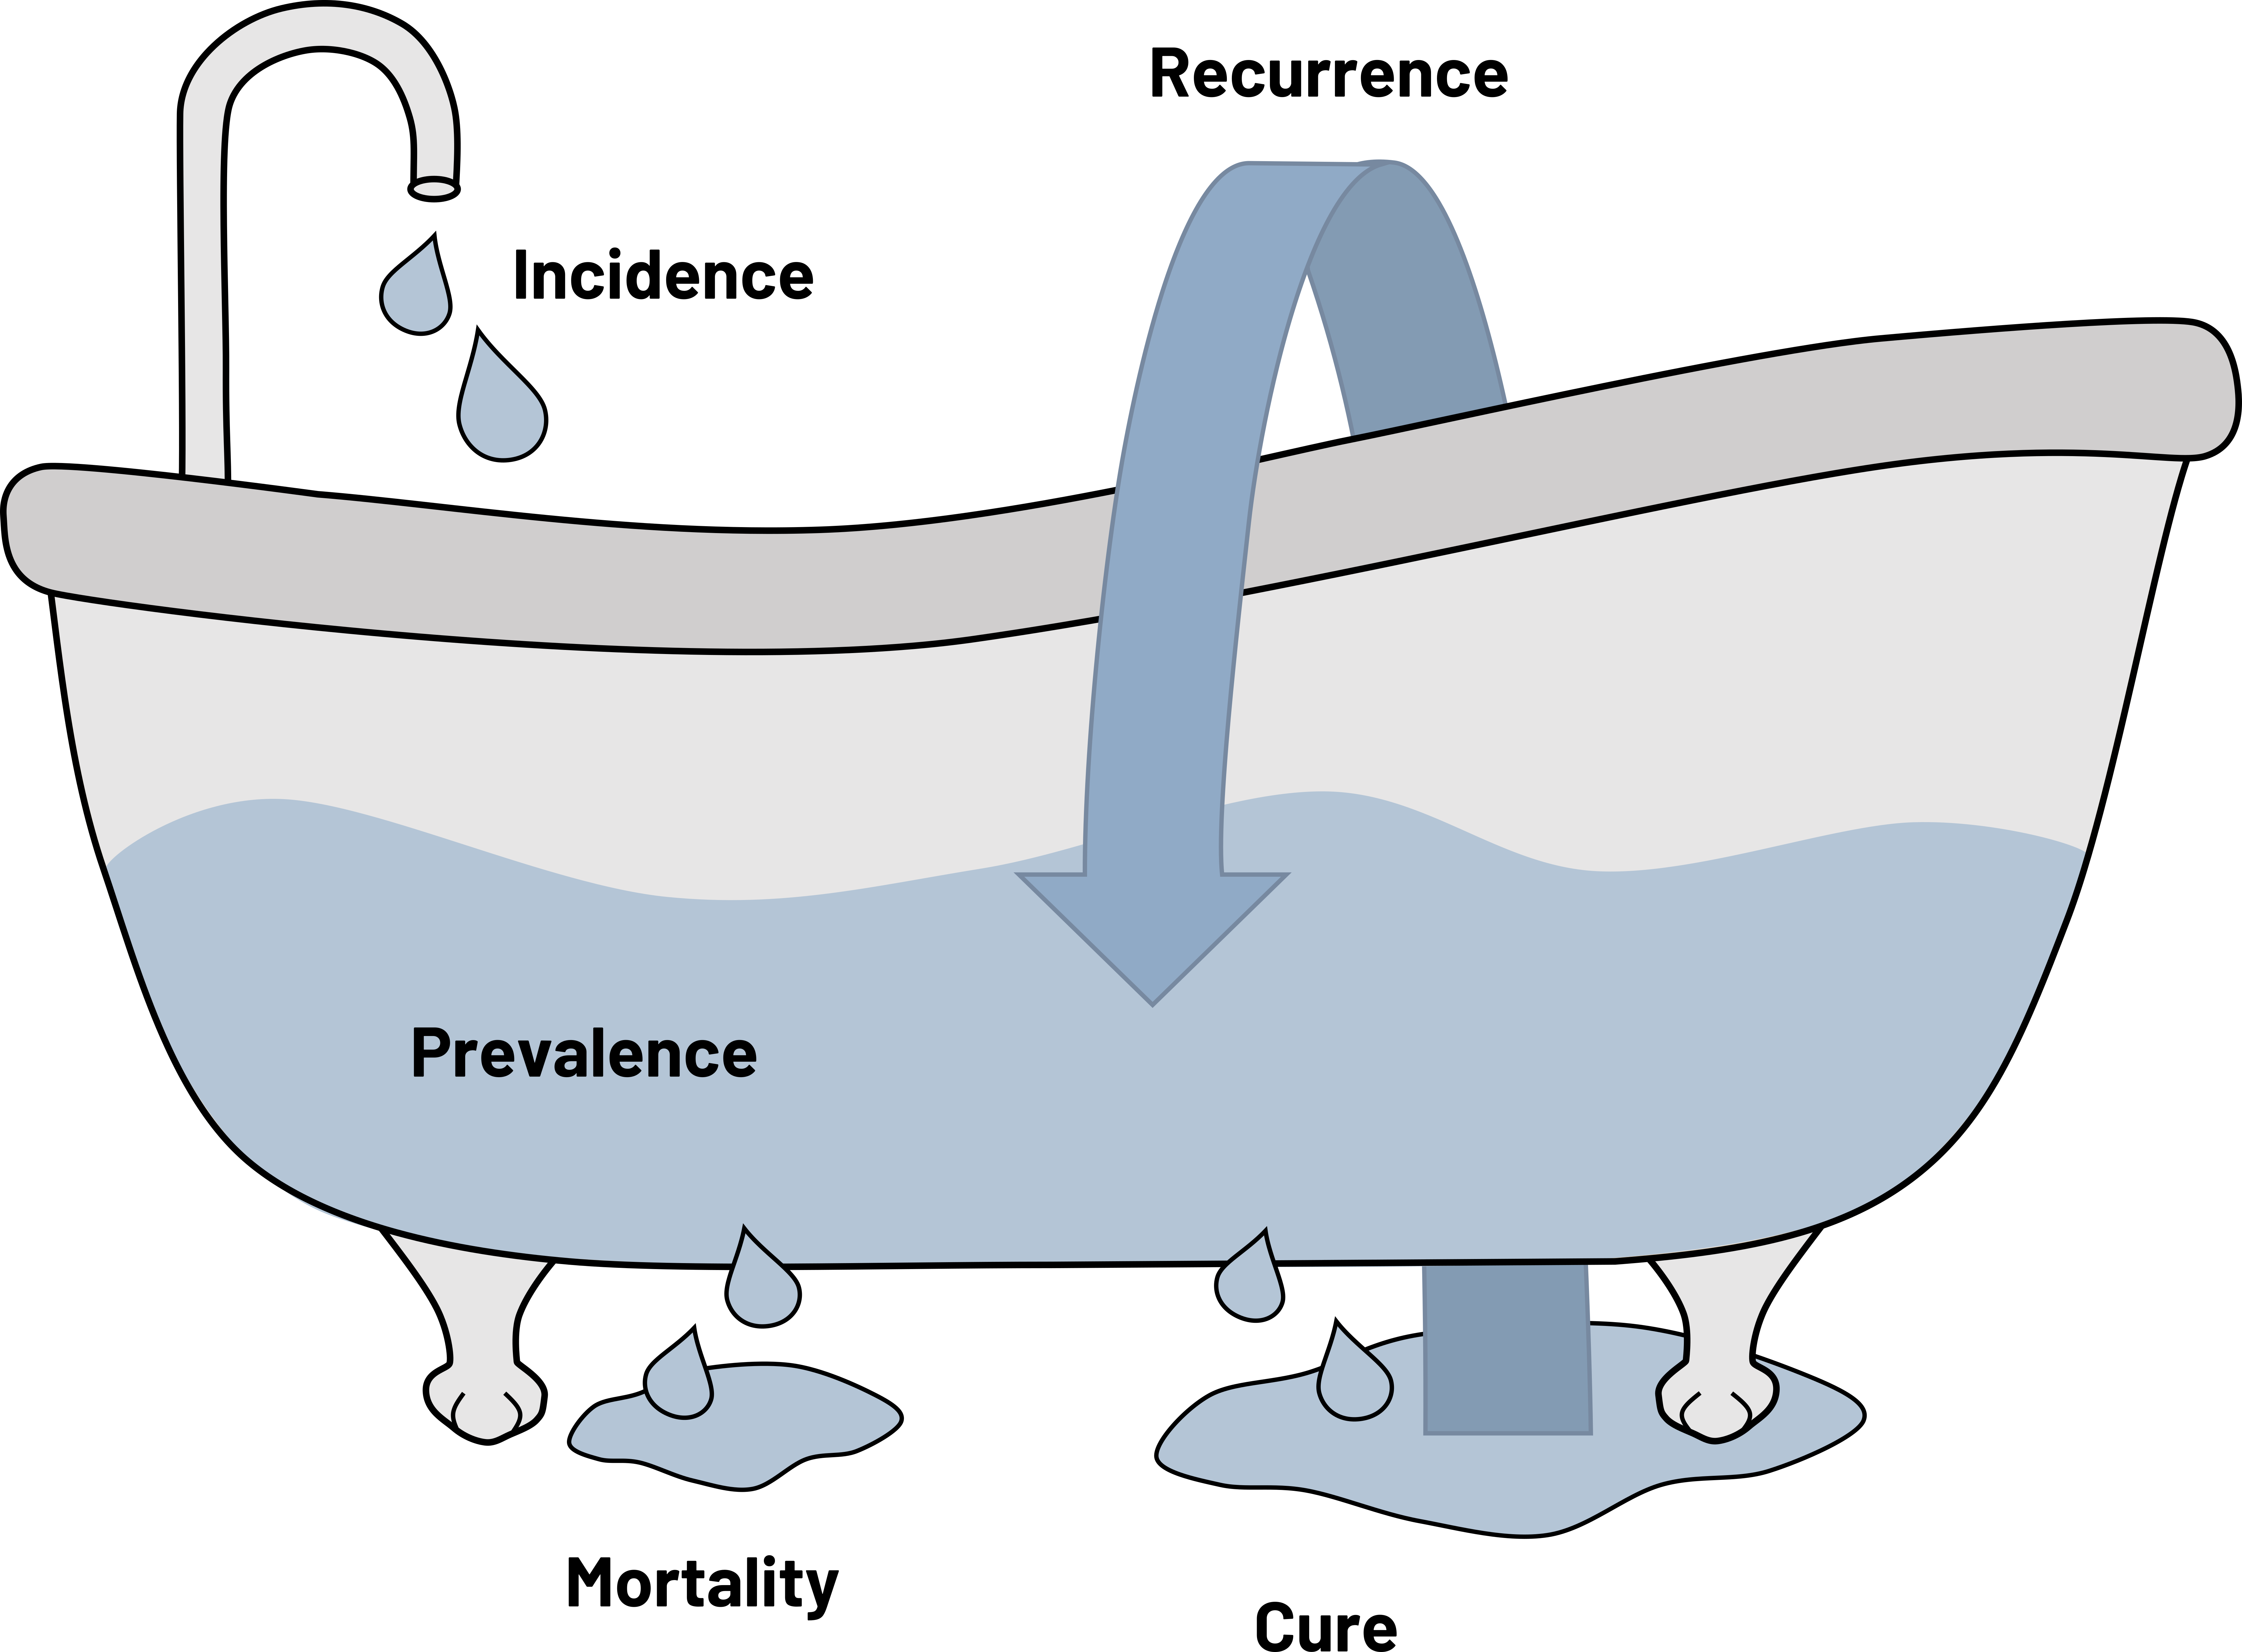 bathtub graphic representation of the previous paragraph